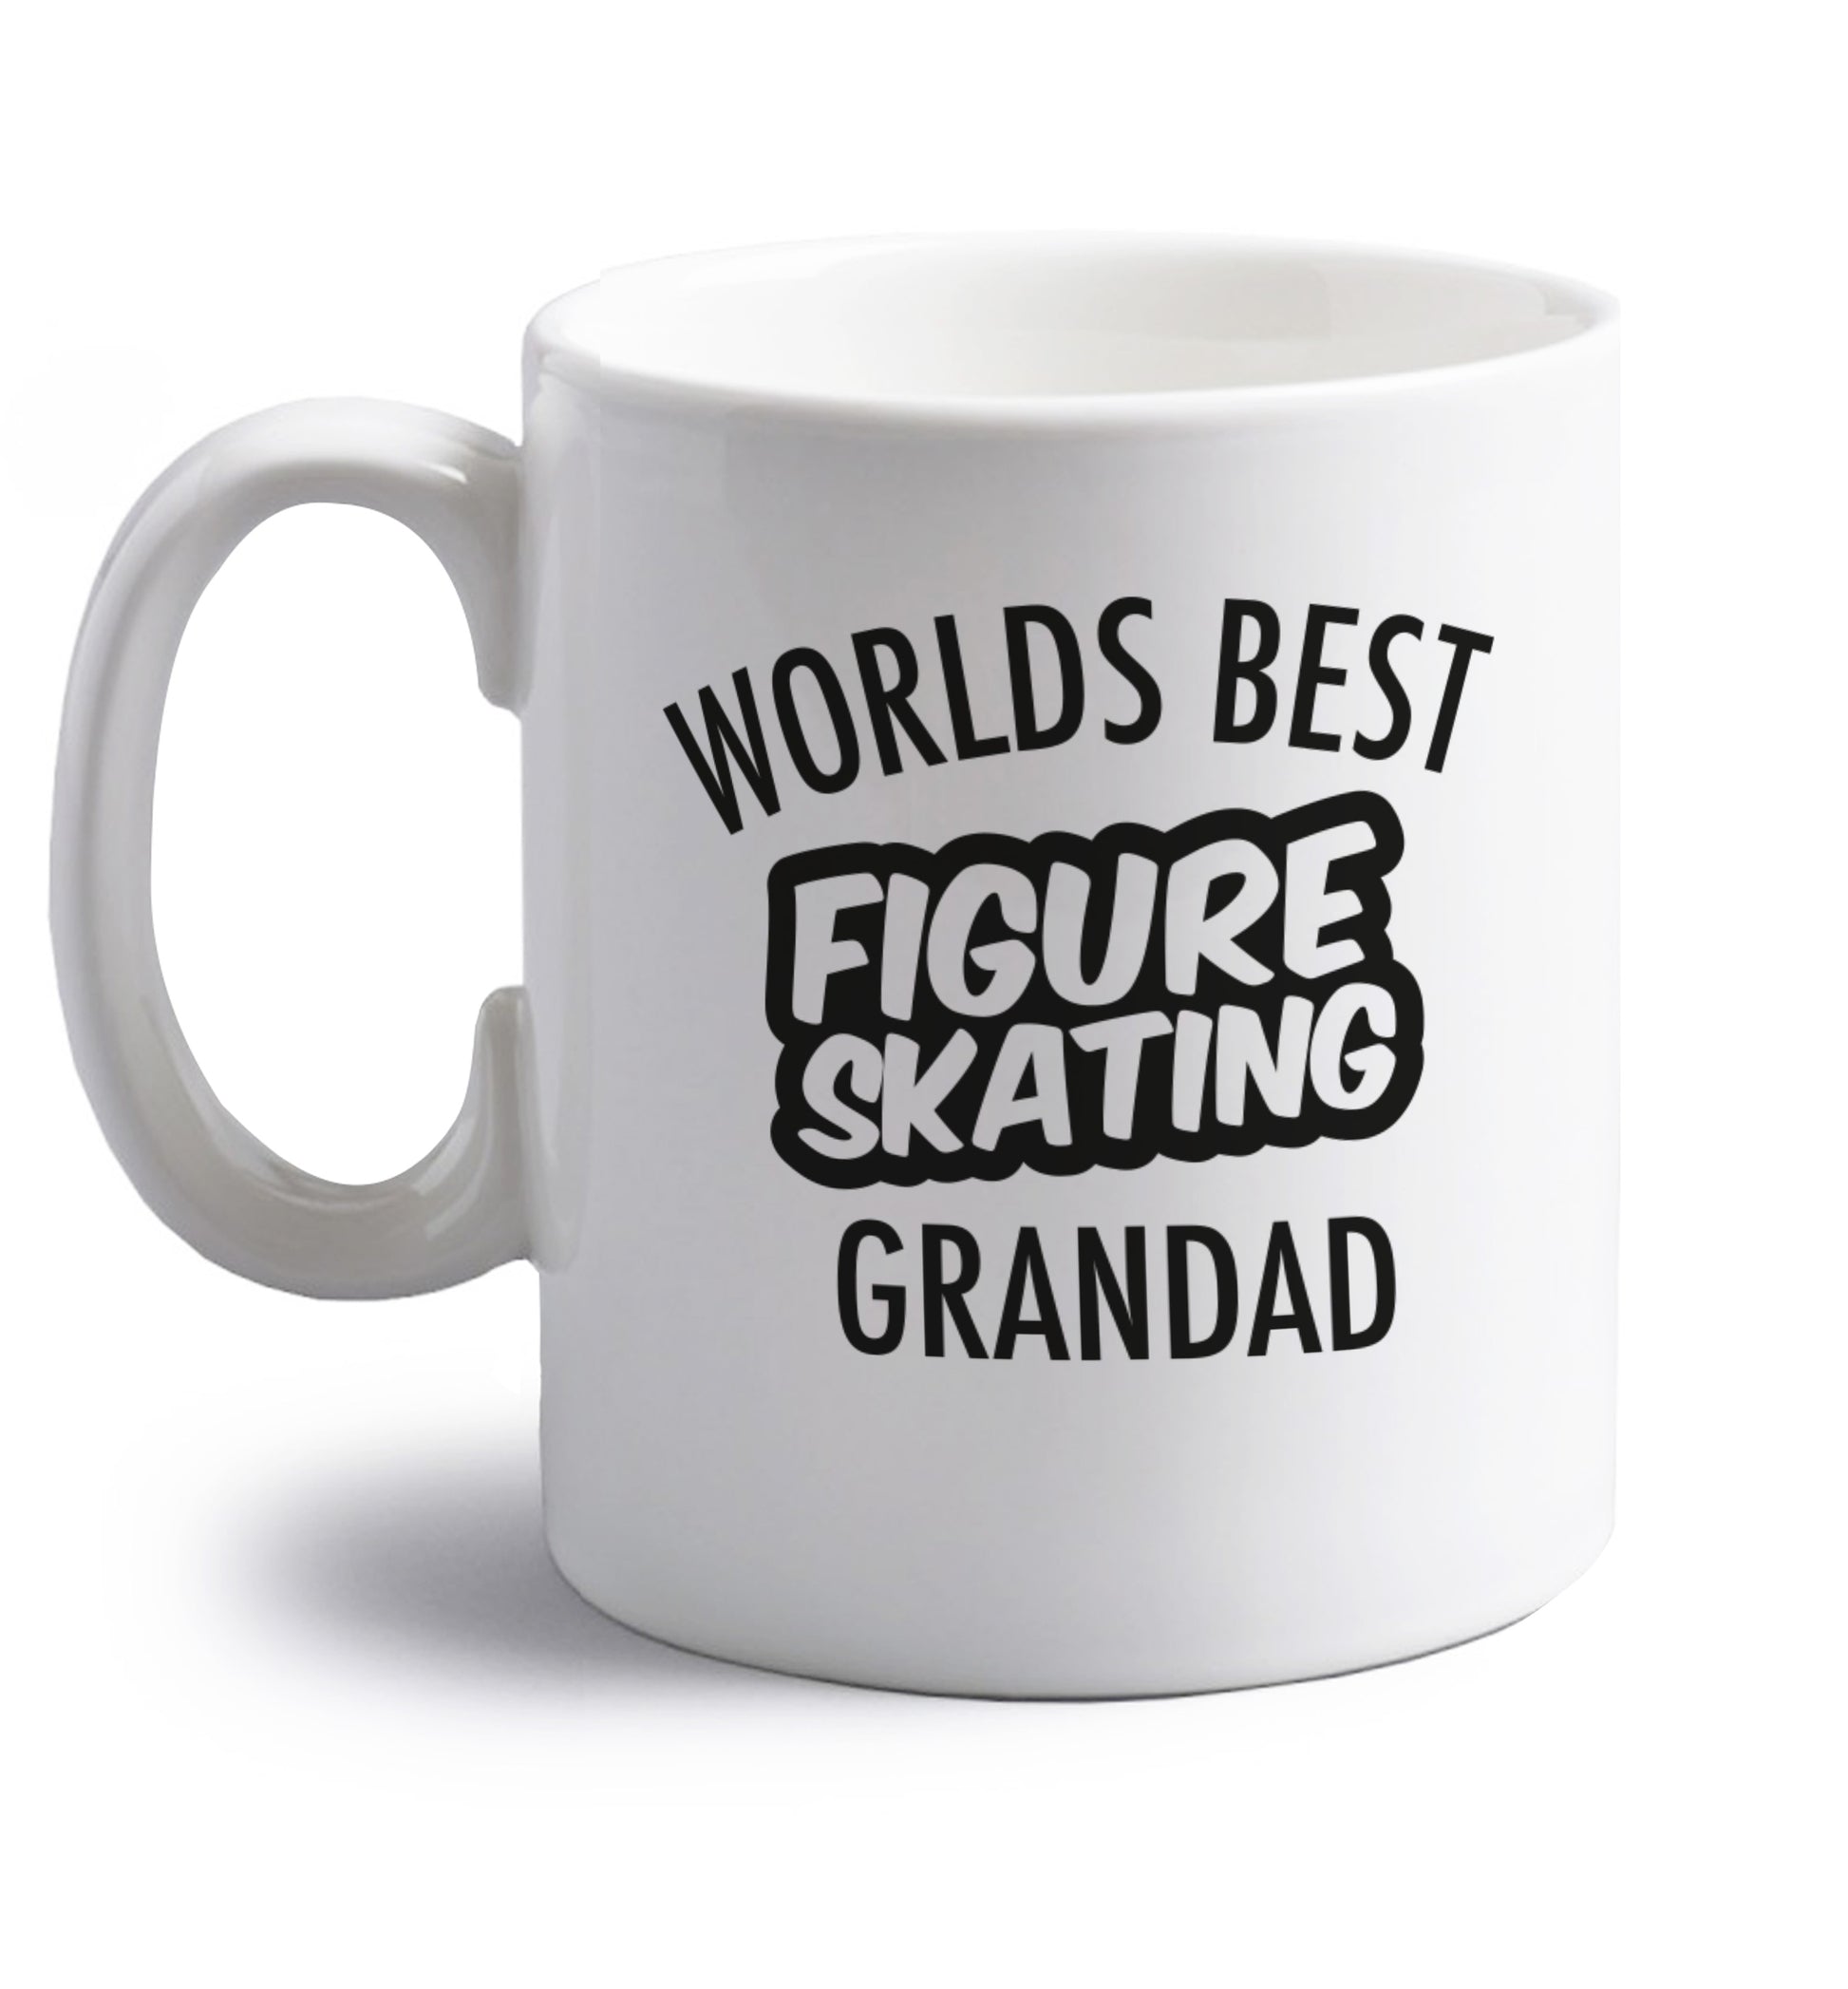 Worlds best figure skating grandad right handed white ceramic mug 